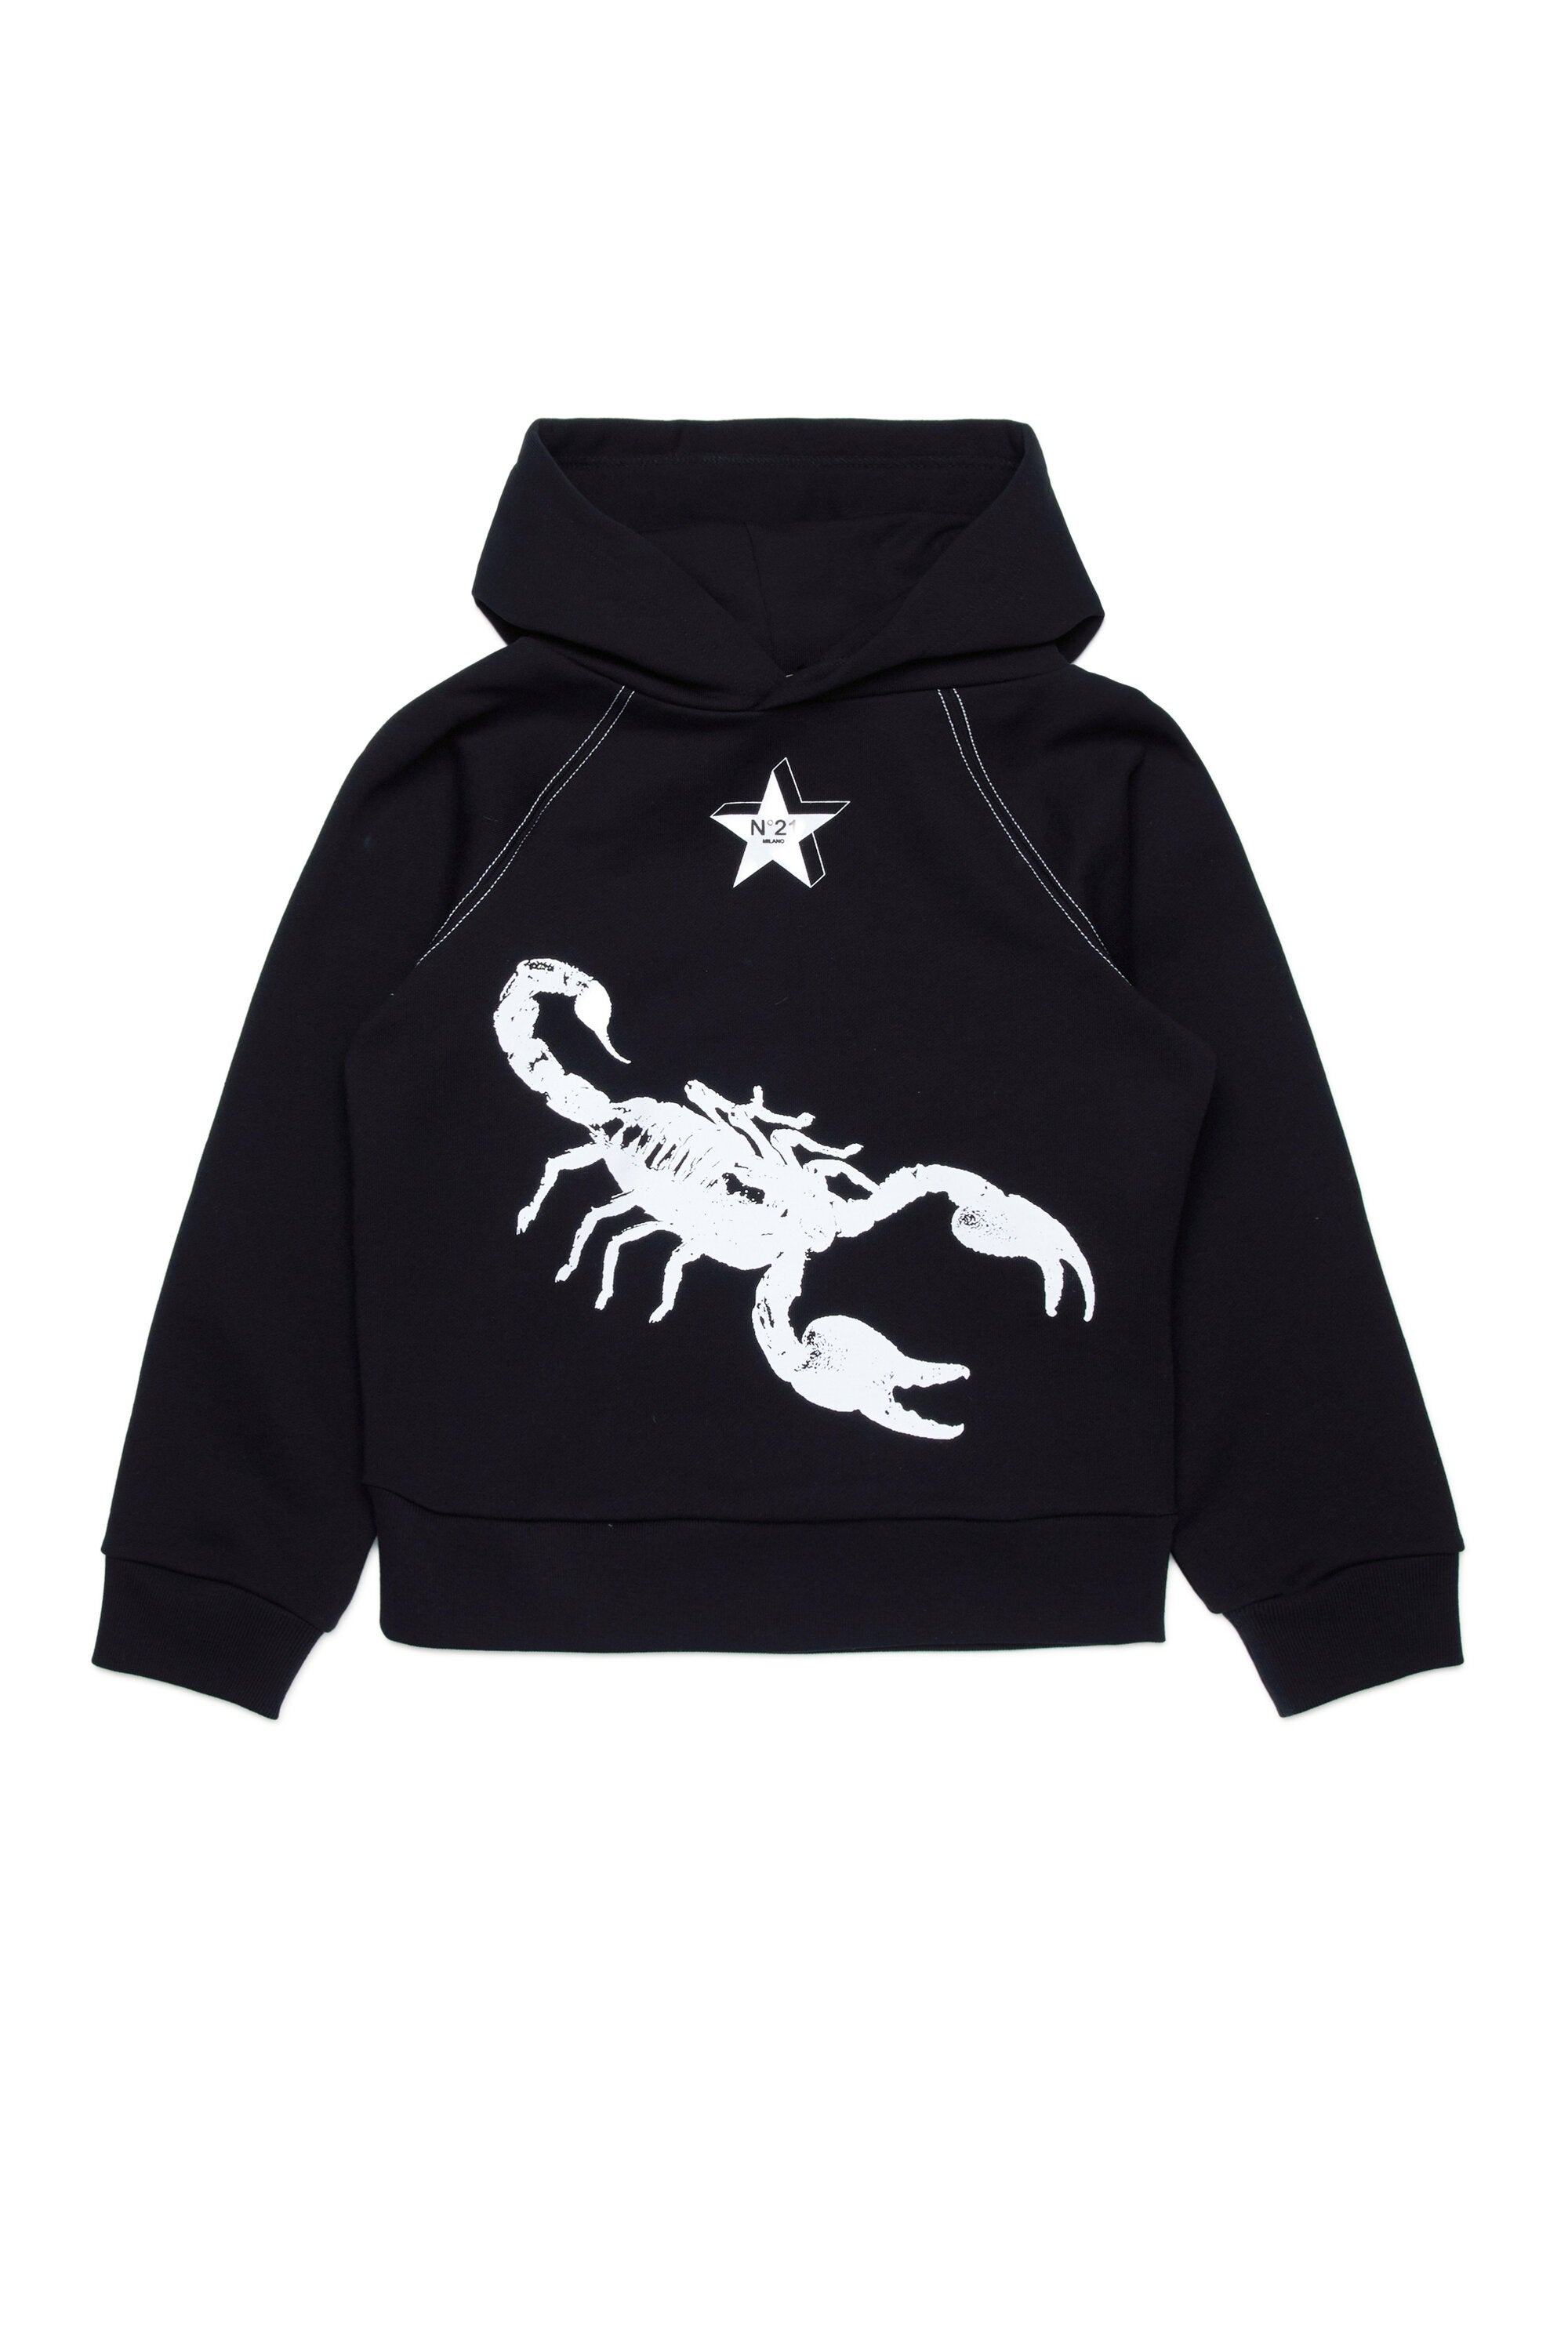 Hooded sweatshirt with scorpion graphic